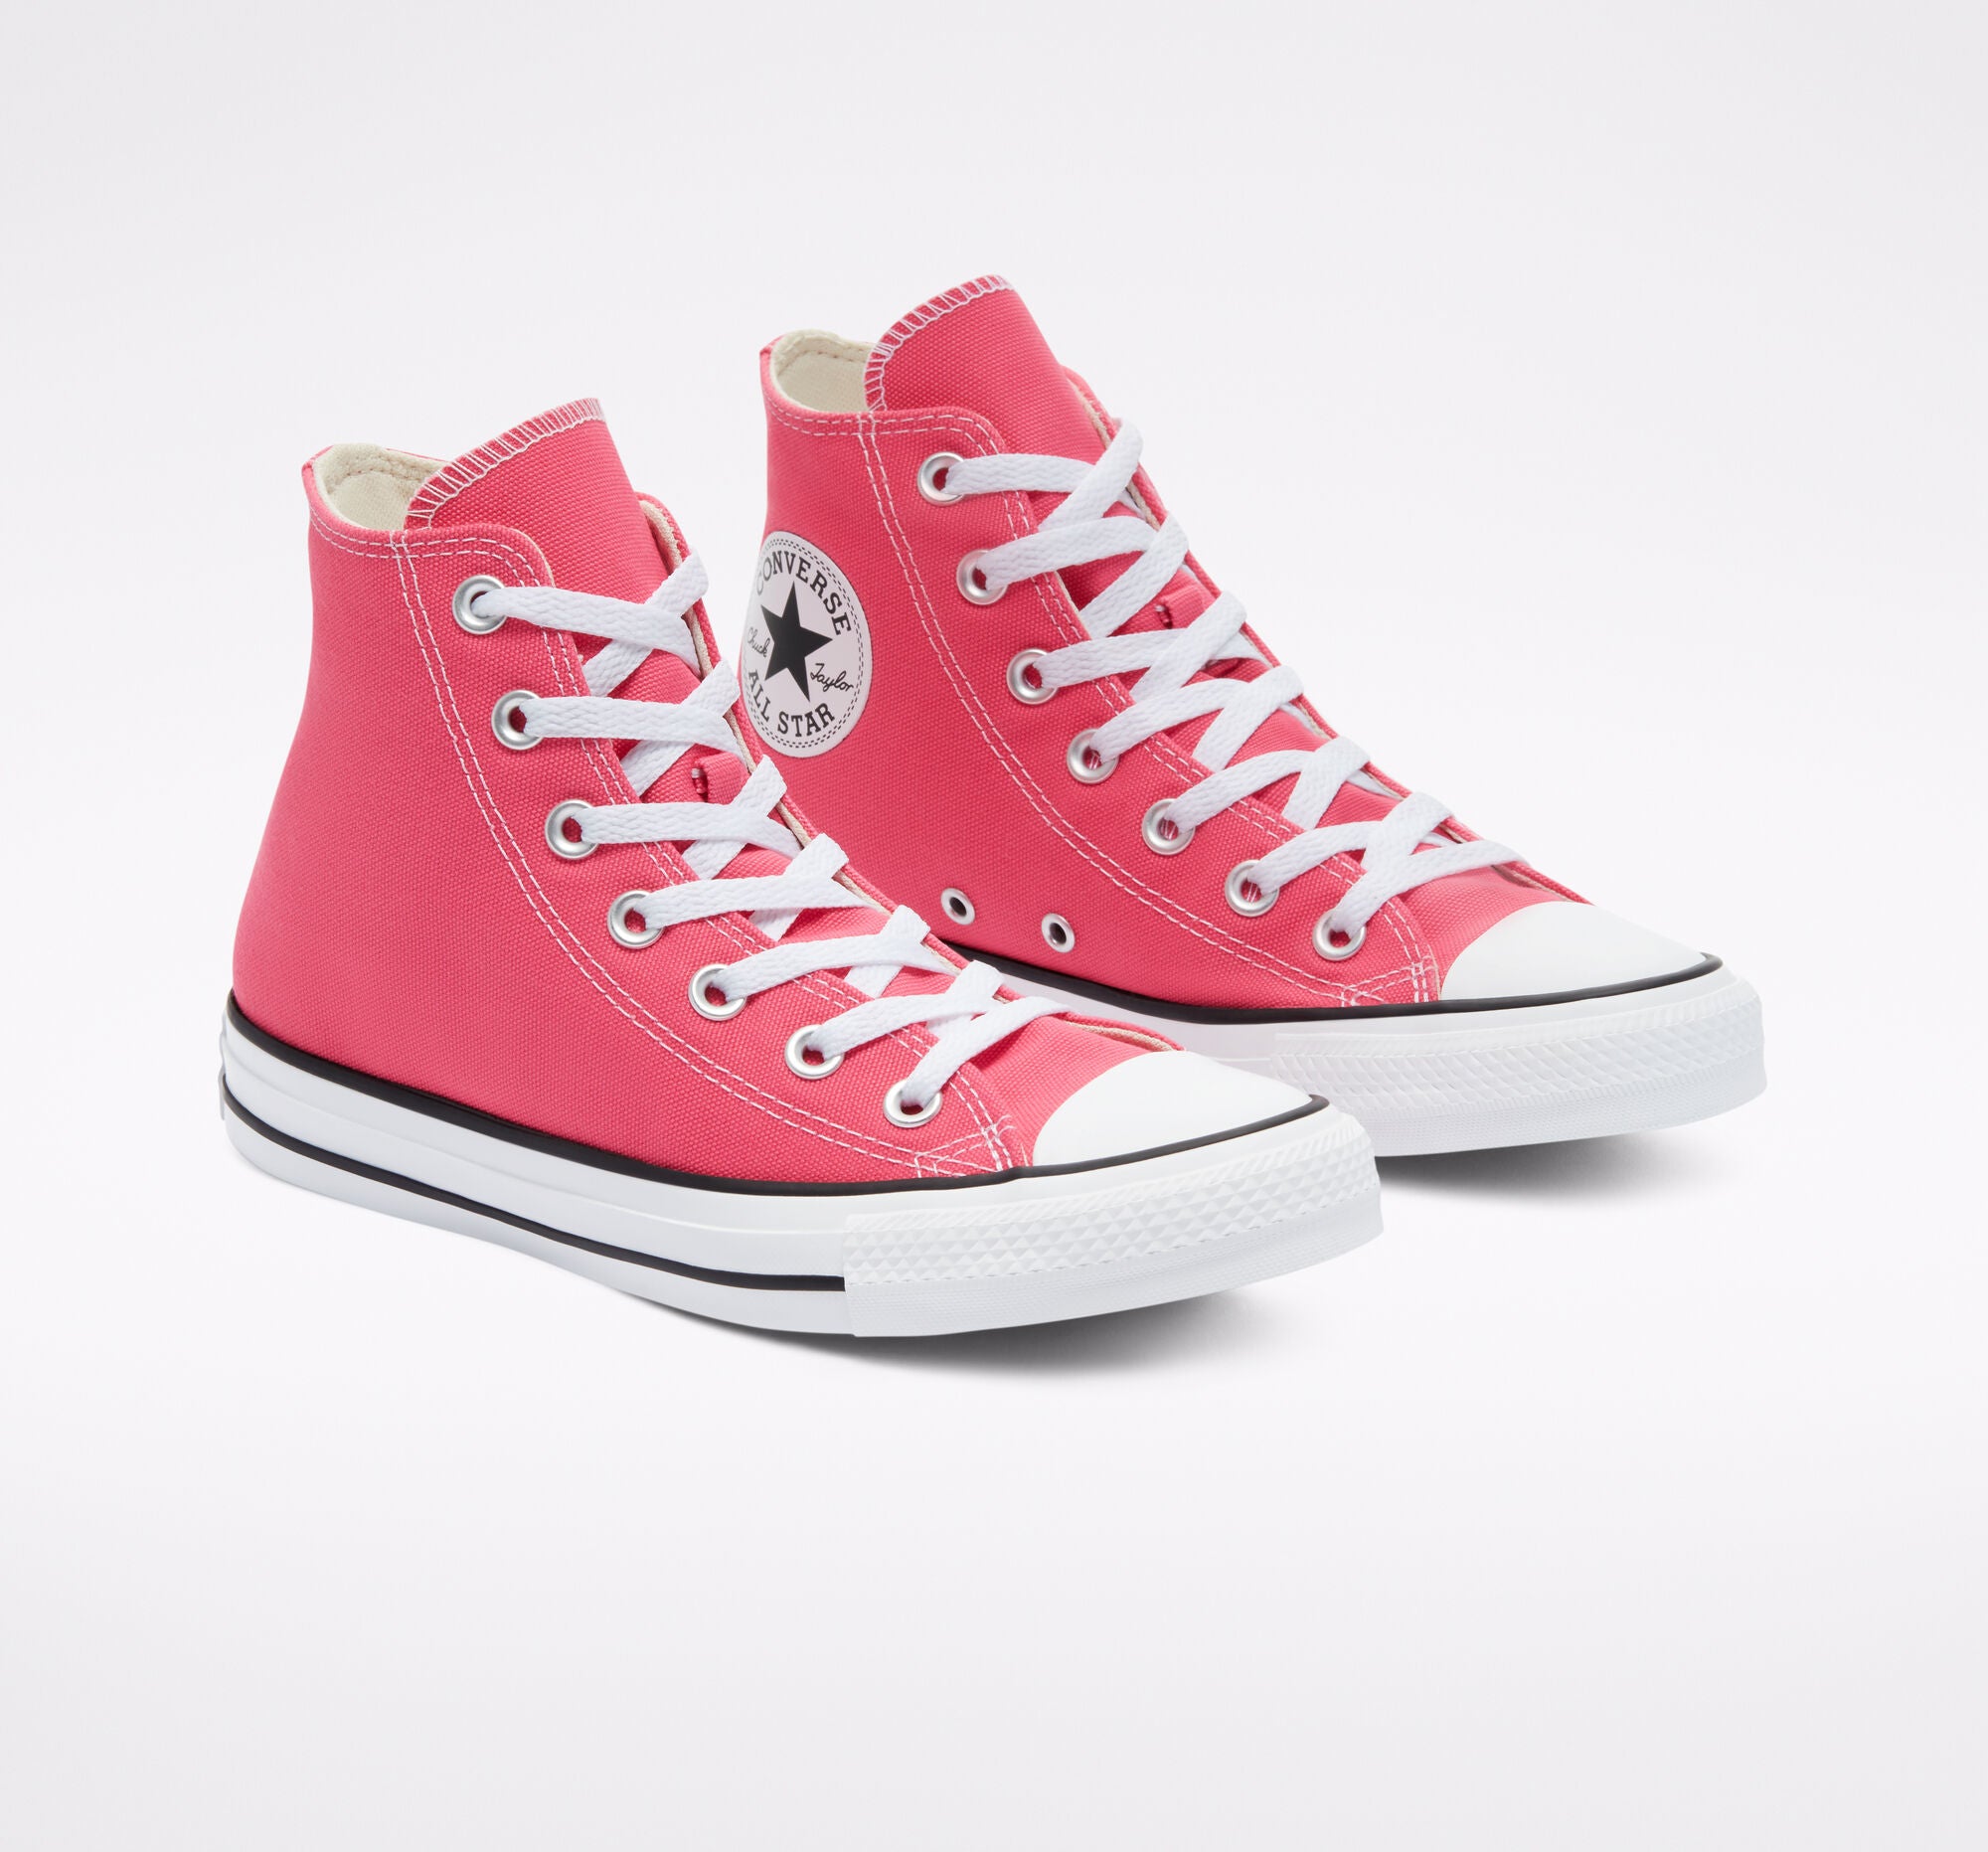 Converse, Shoes, Hot Pink High Top Converse